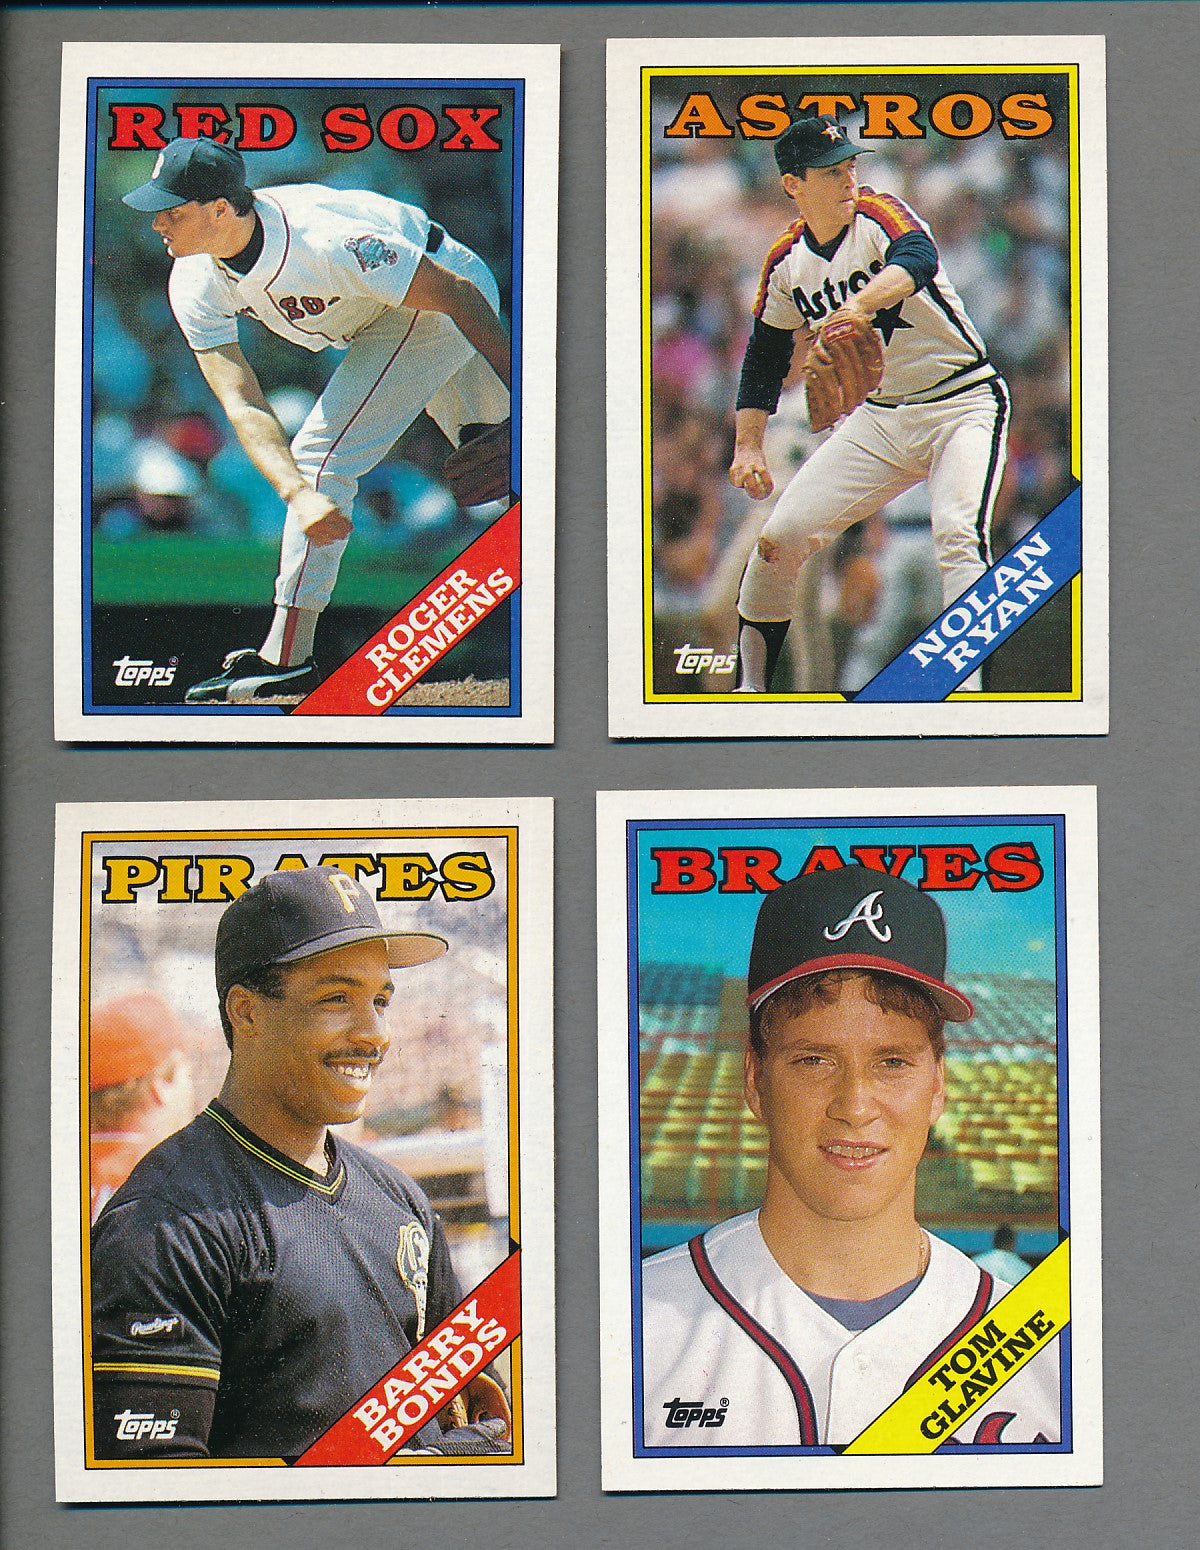 1988 Topps Baseball Complete Set (792) NM/MT MT